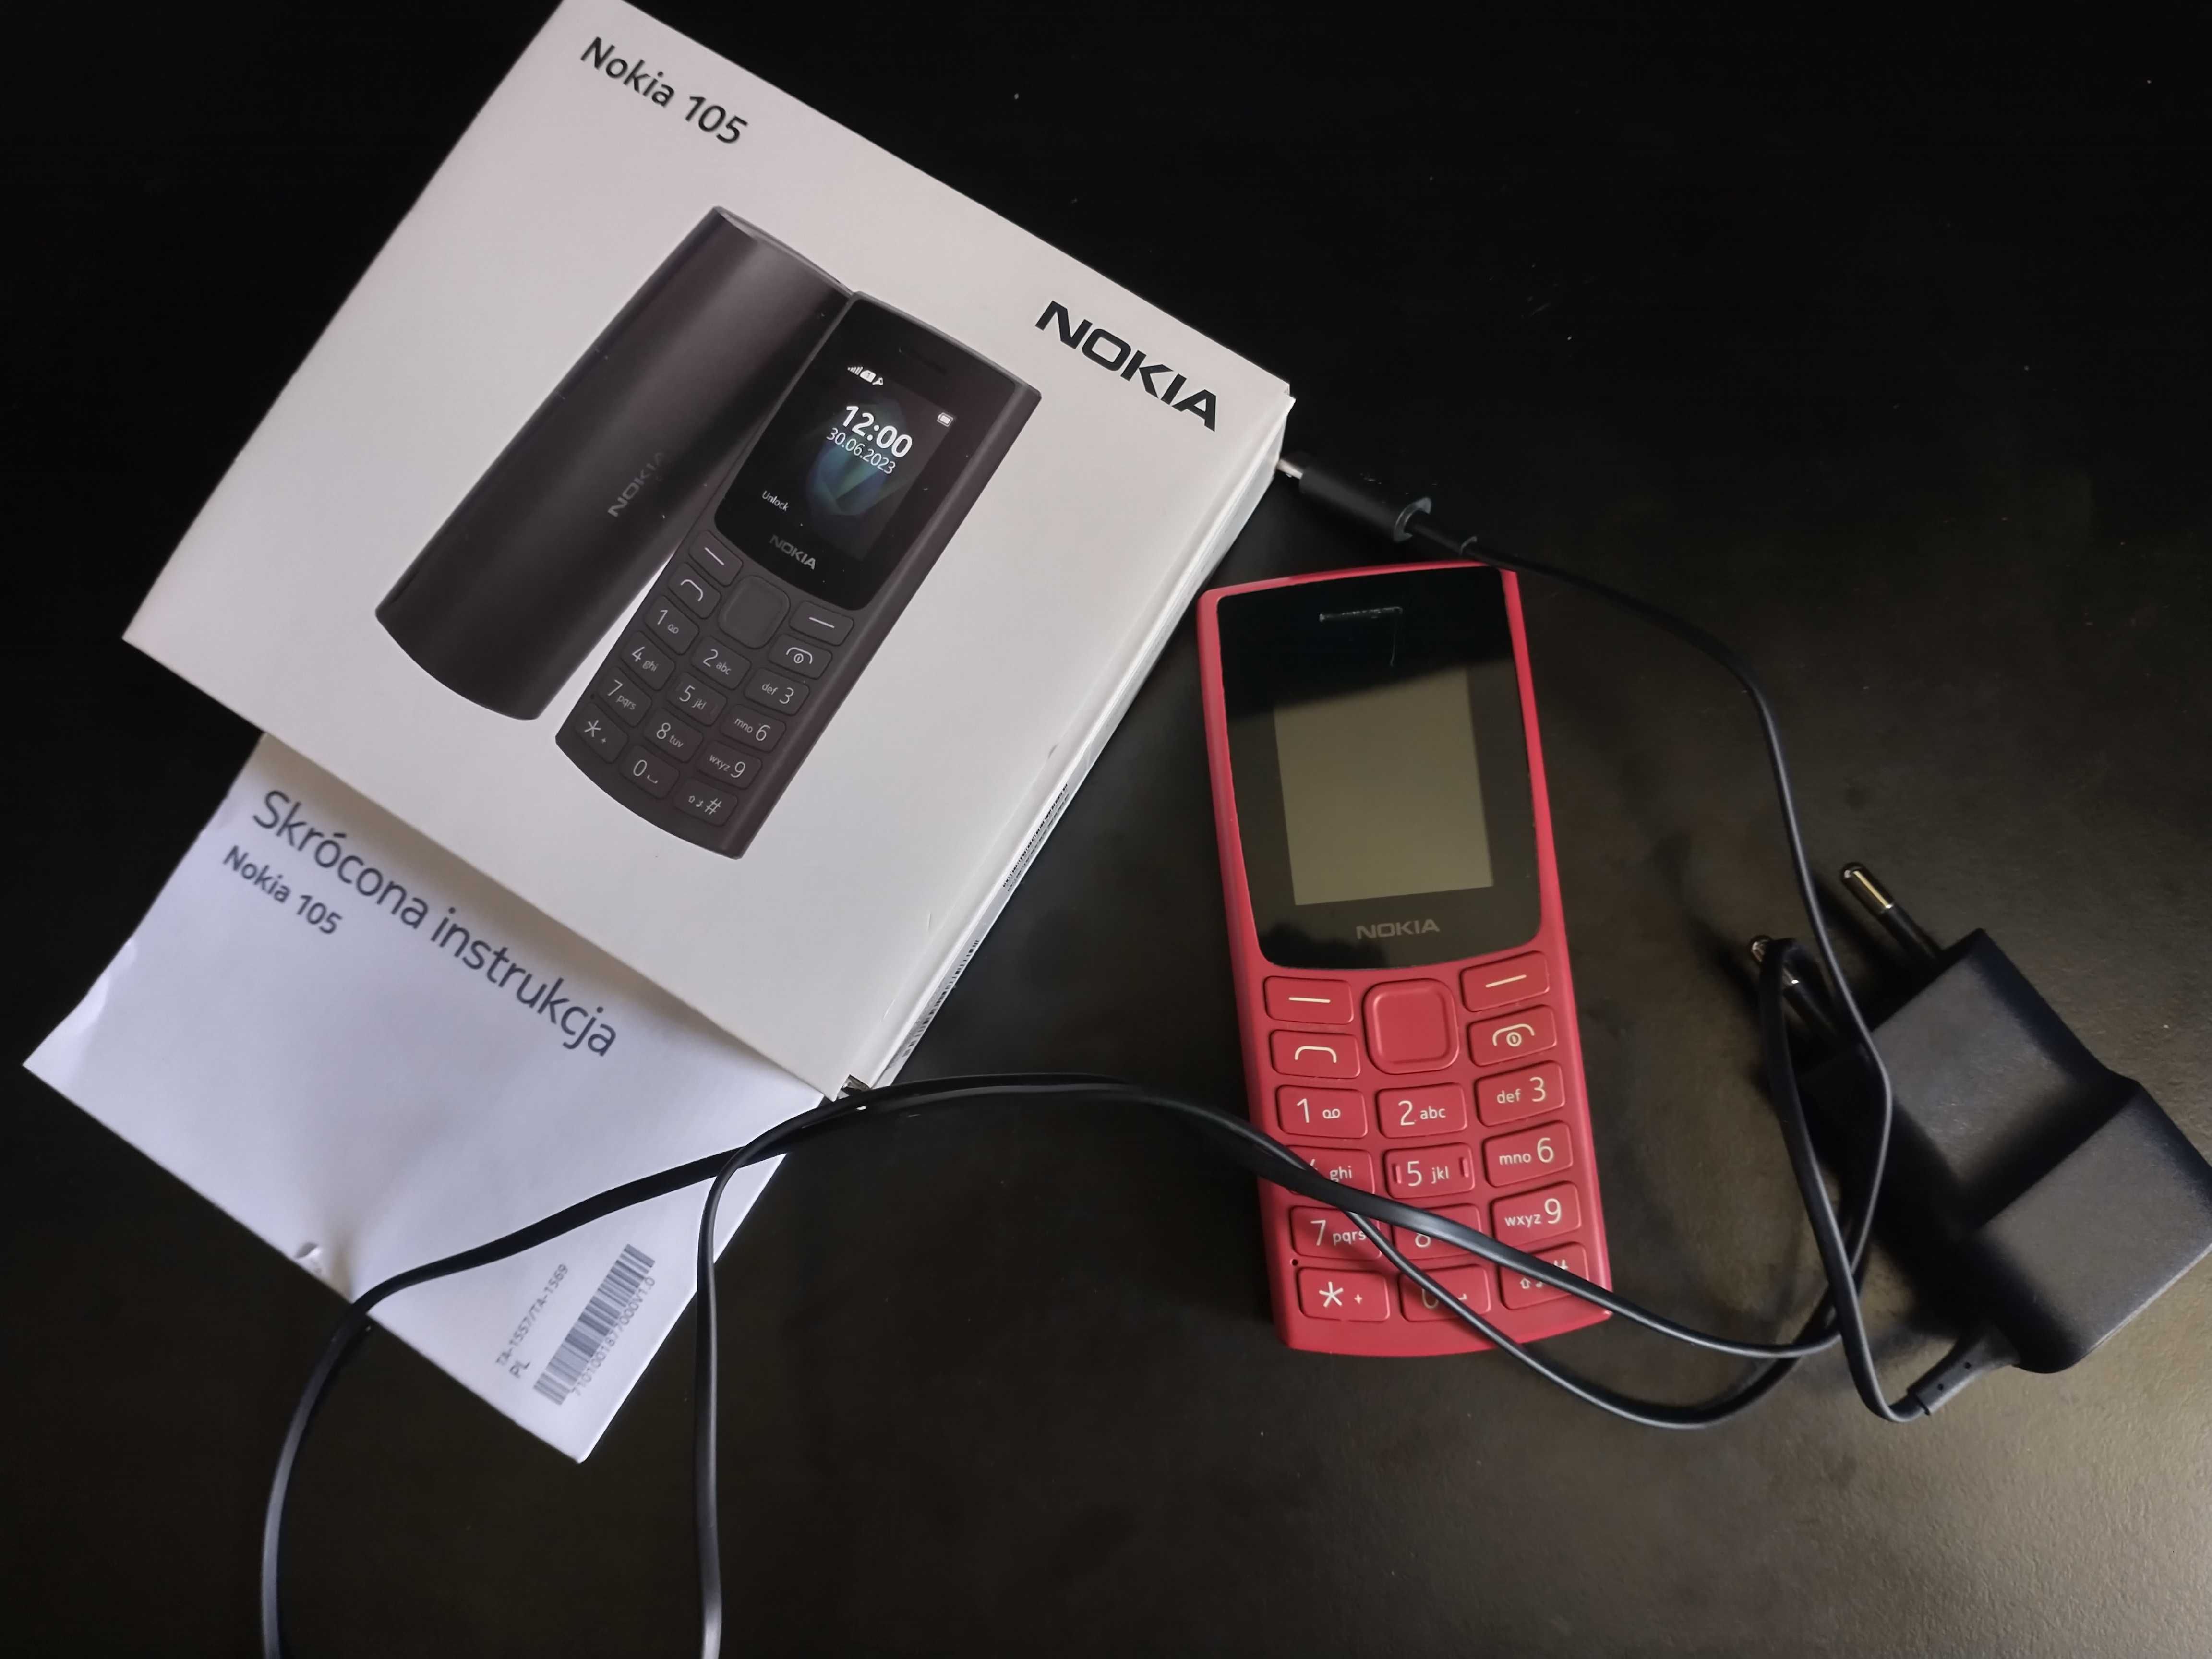 Nokia 105 bordowa dla seniora wersja 2017